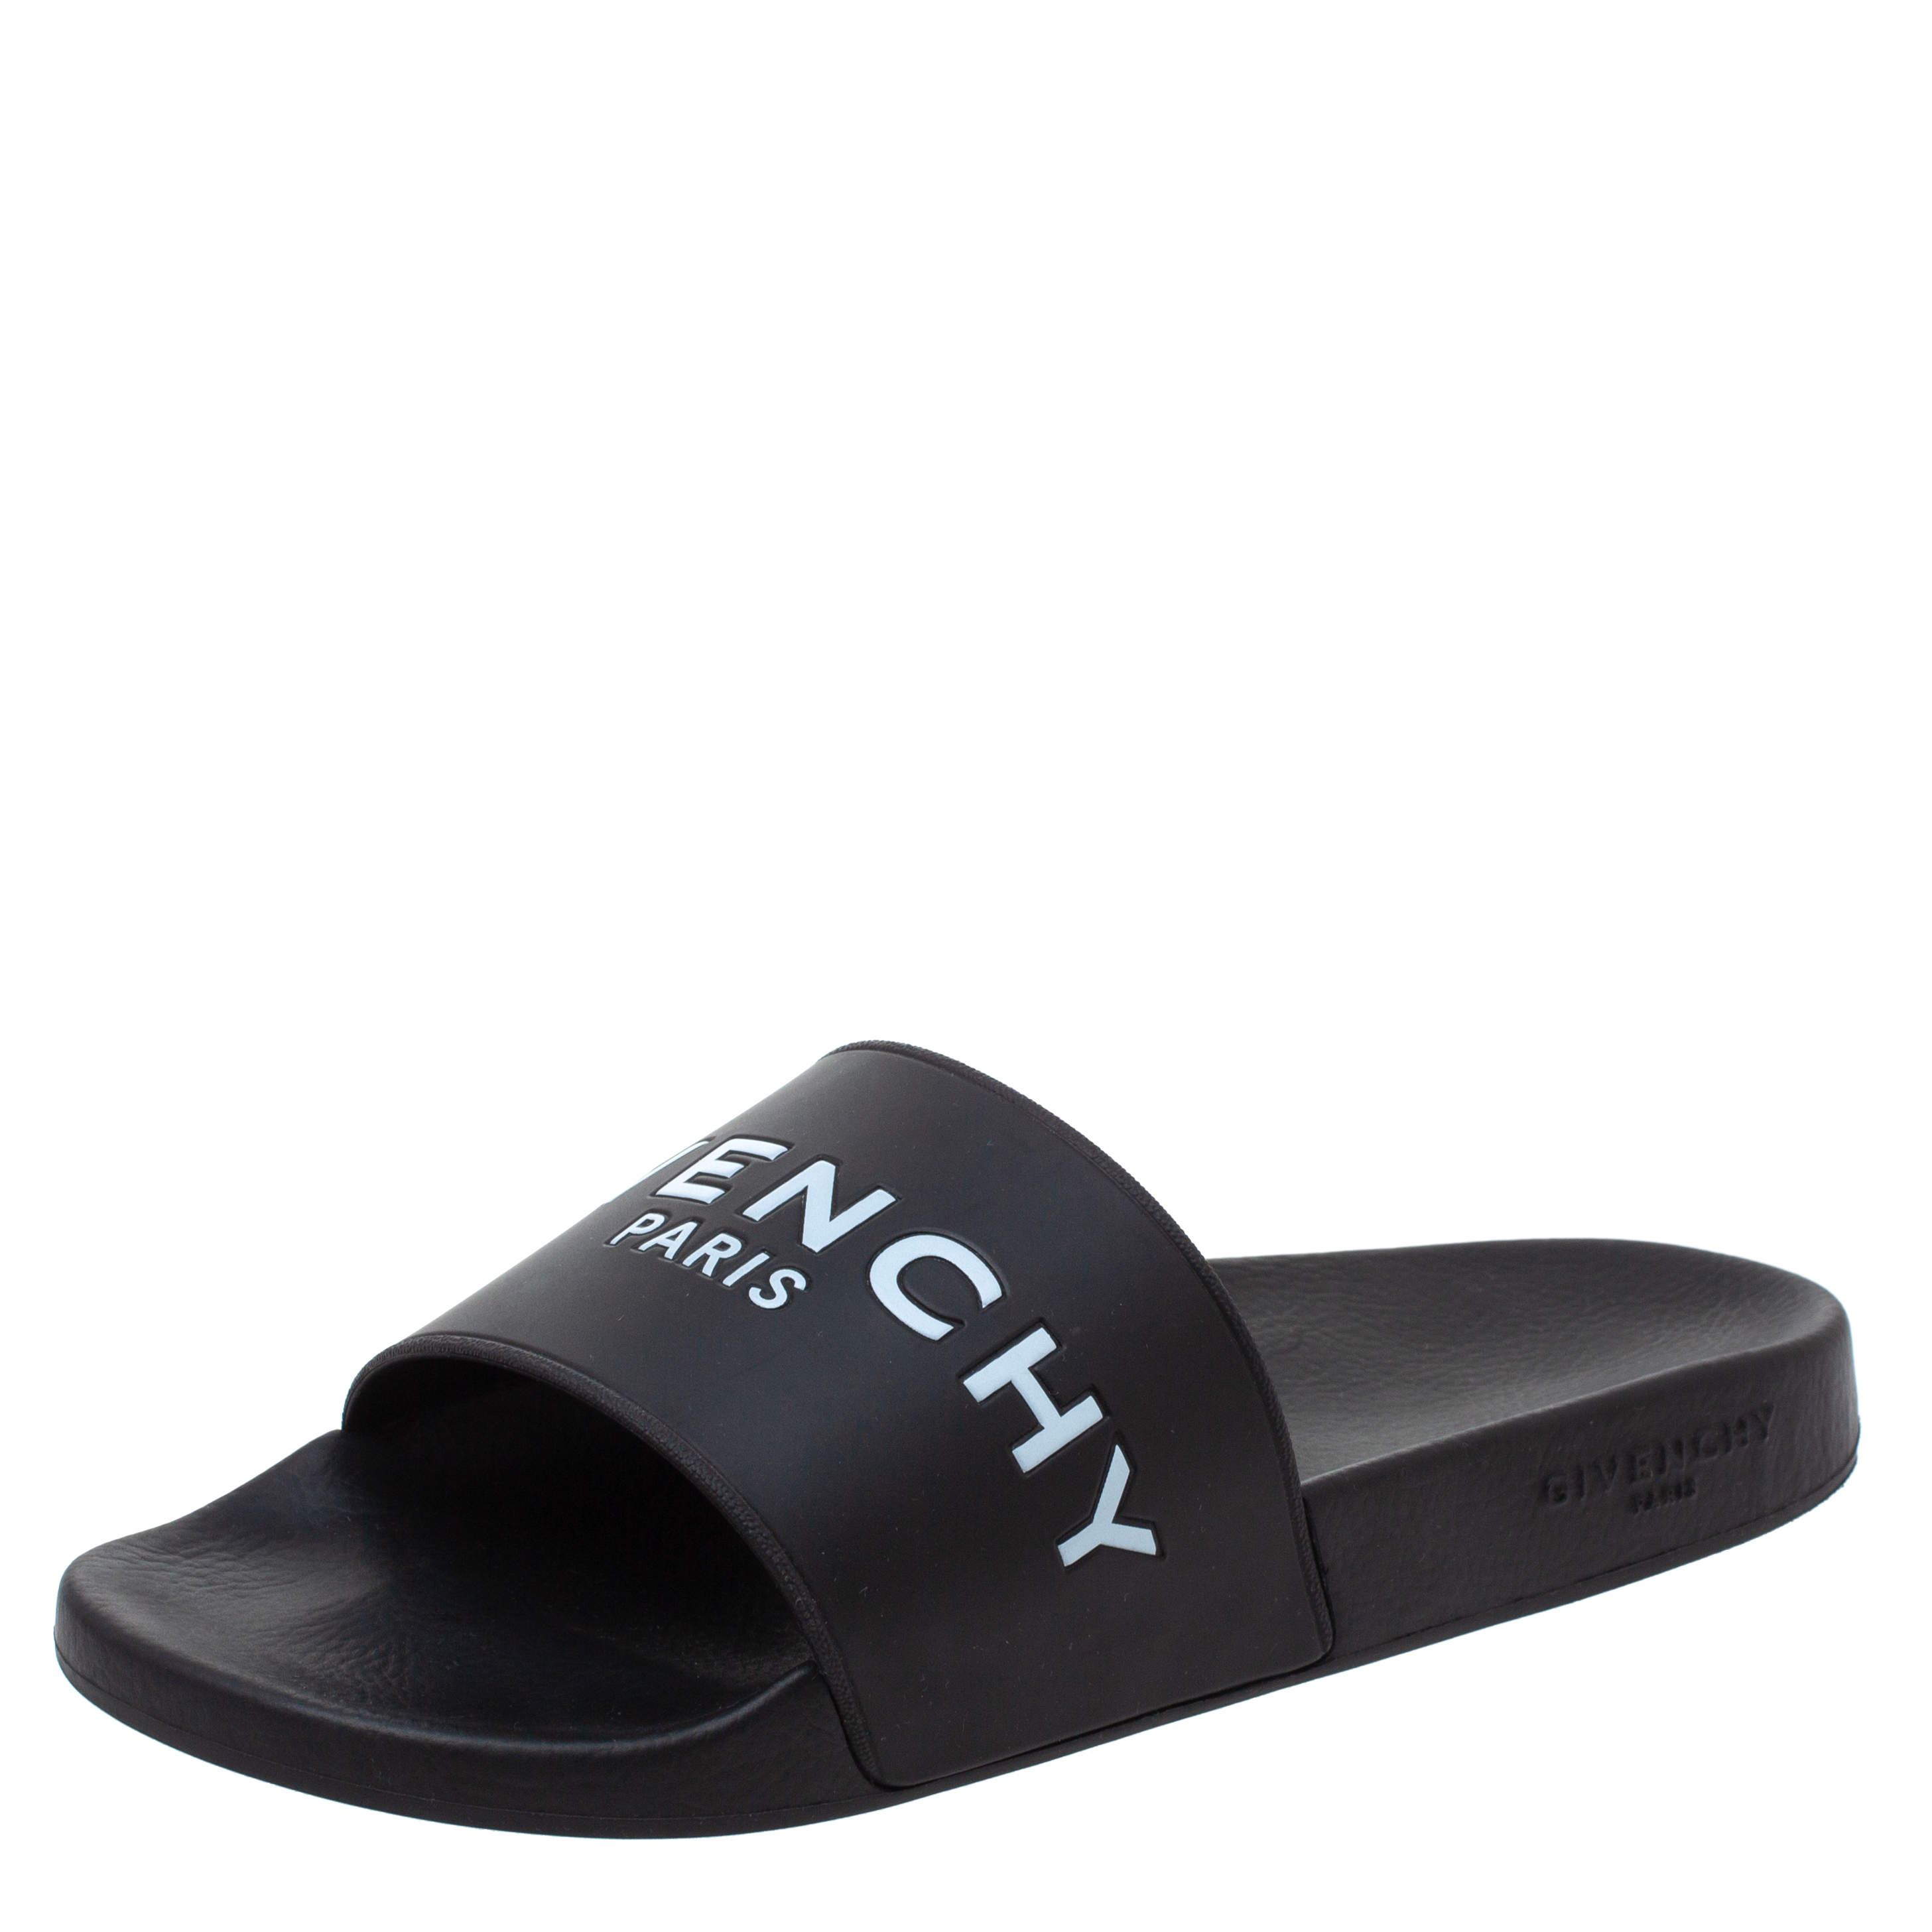 Givenchy Black Rubber Logo Pool Slides Size 44